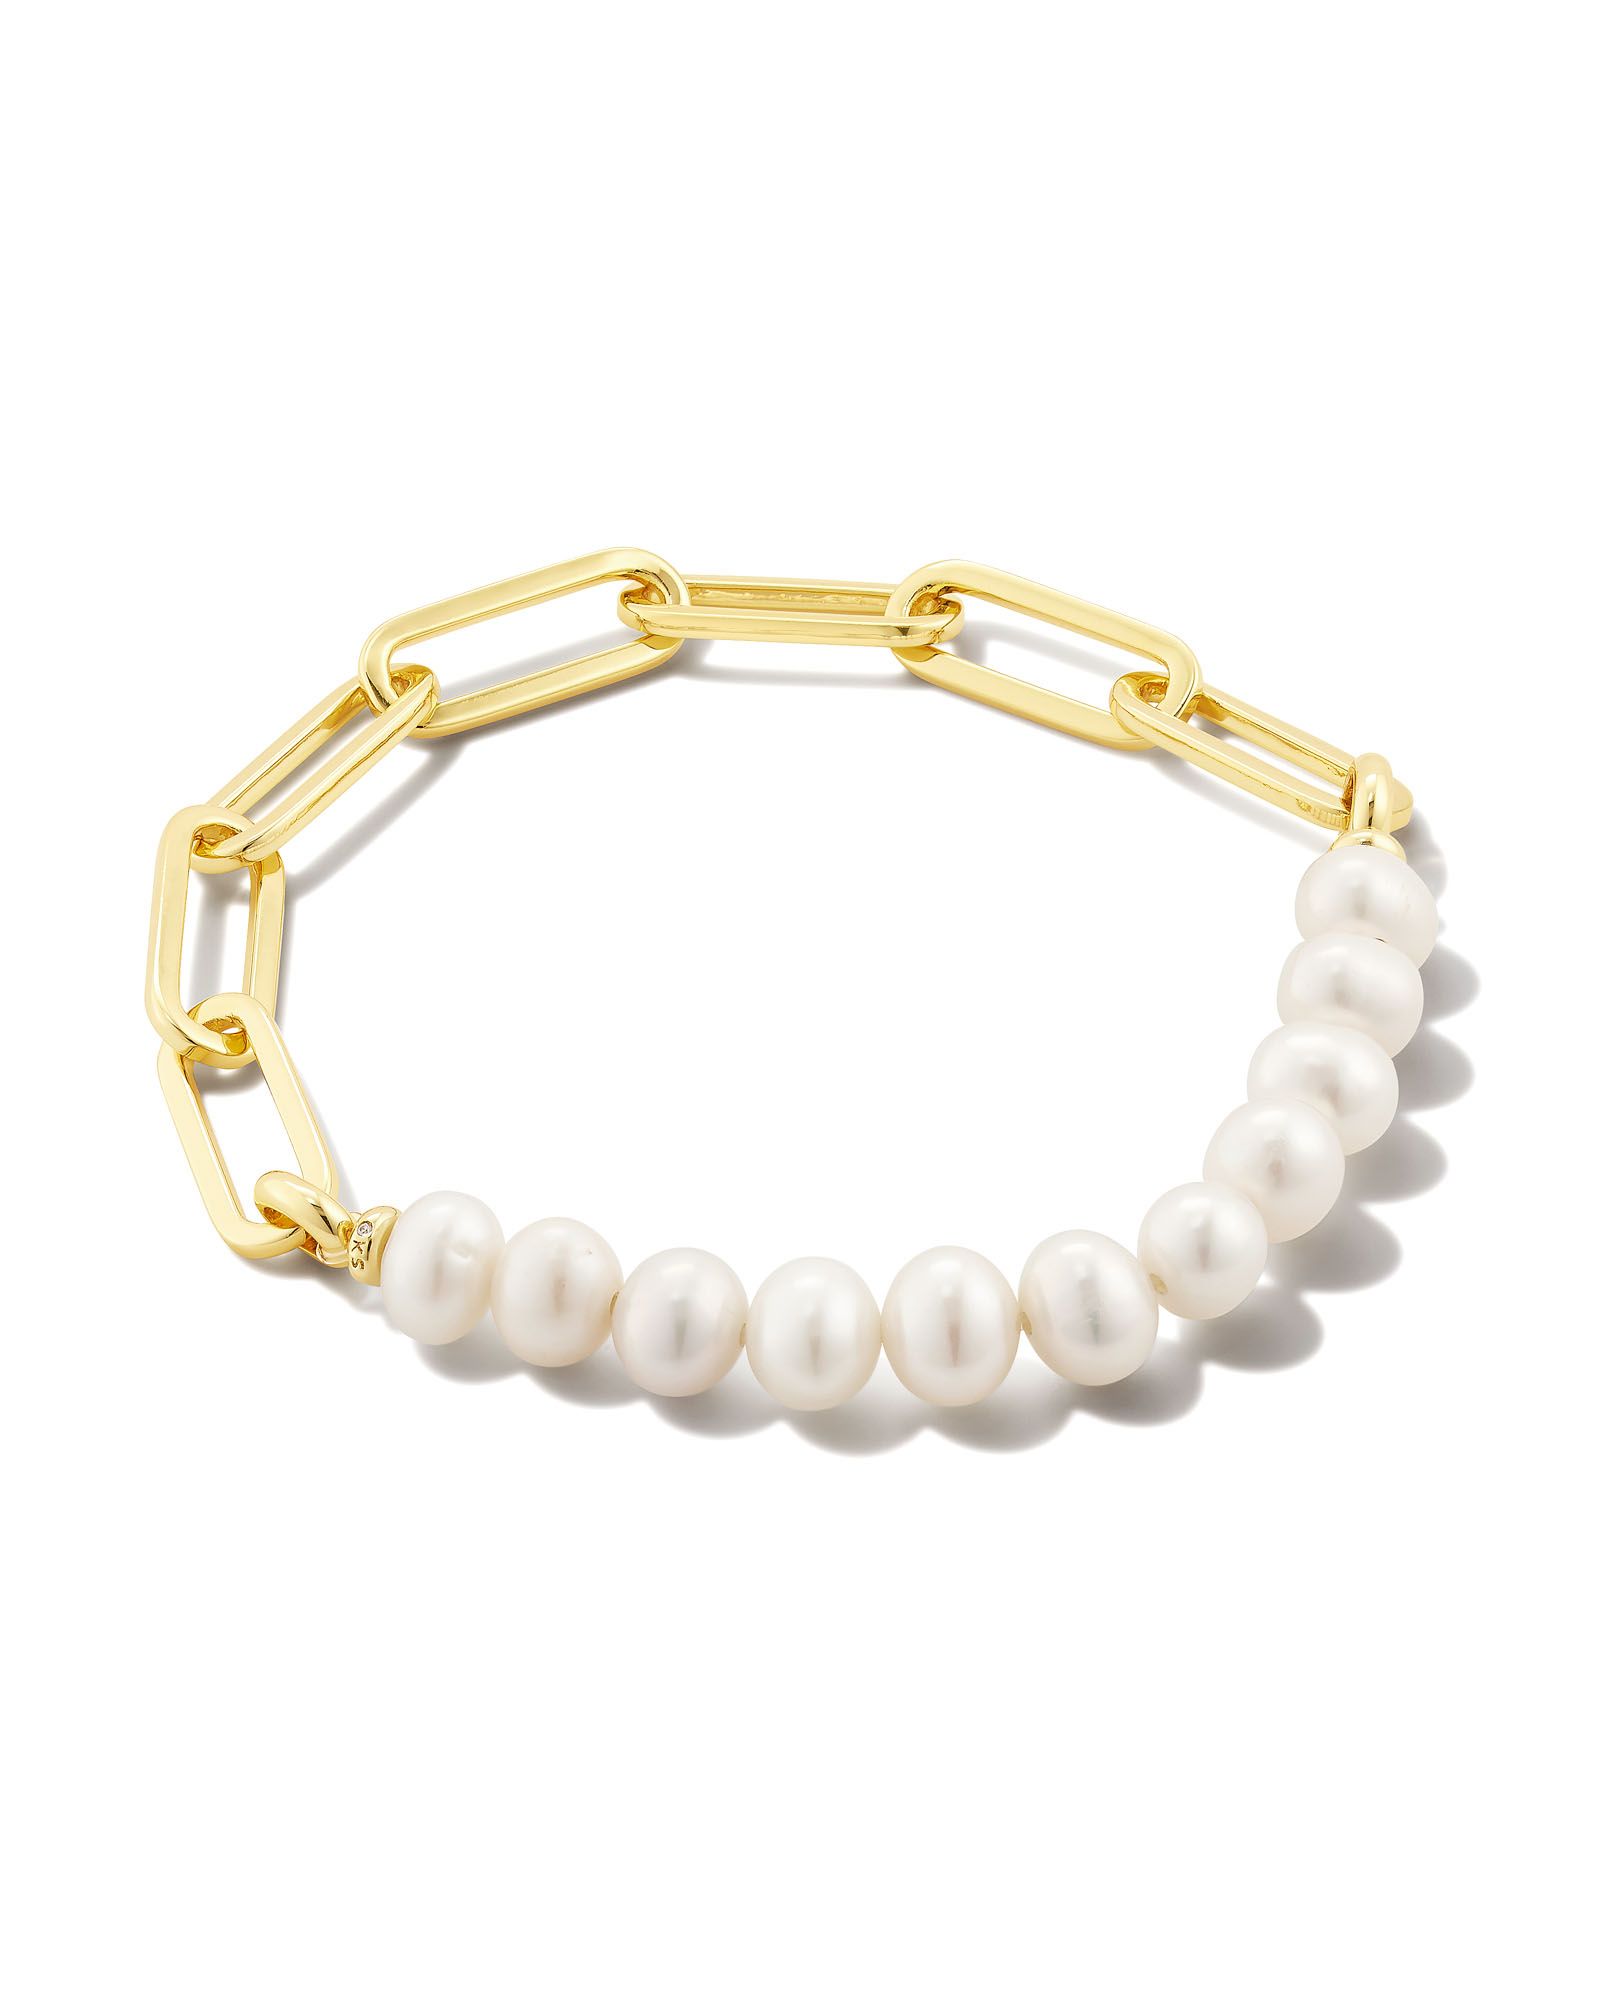 Ashton Gold Half Chain Bracelet in White Pearl | Kendra Scott | Kendra Scott